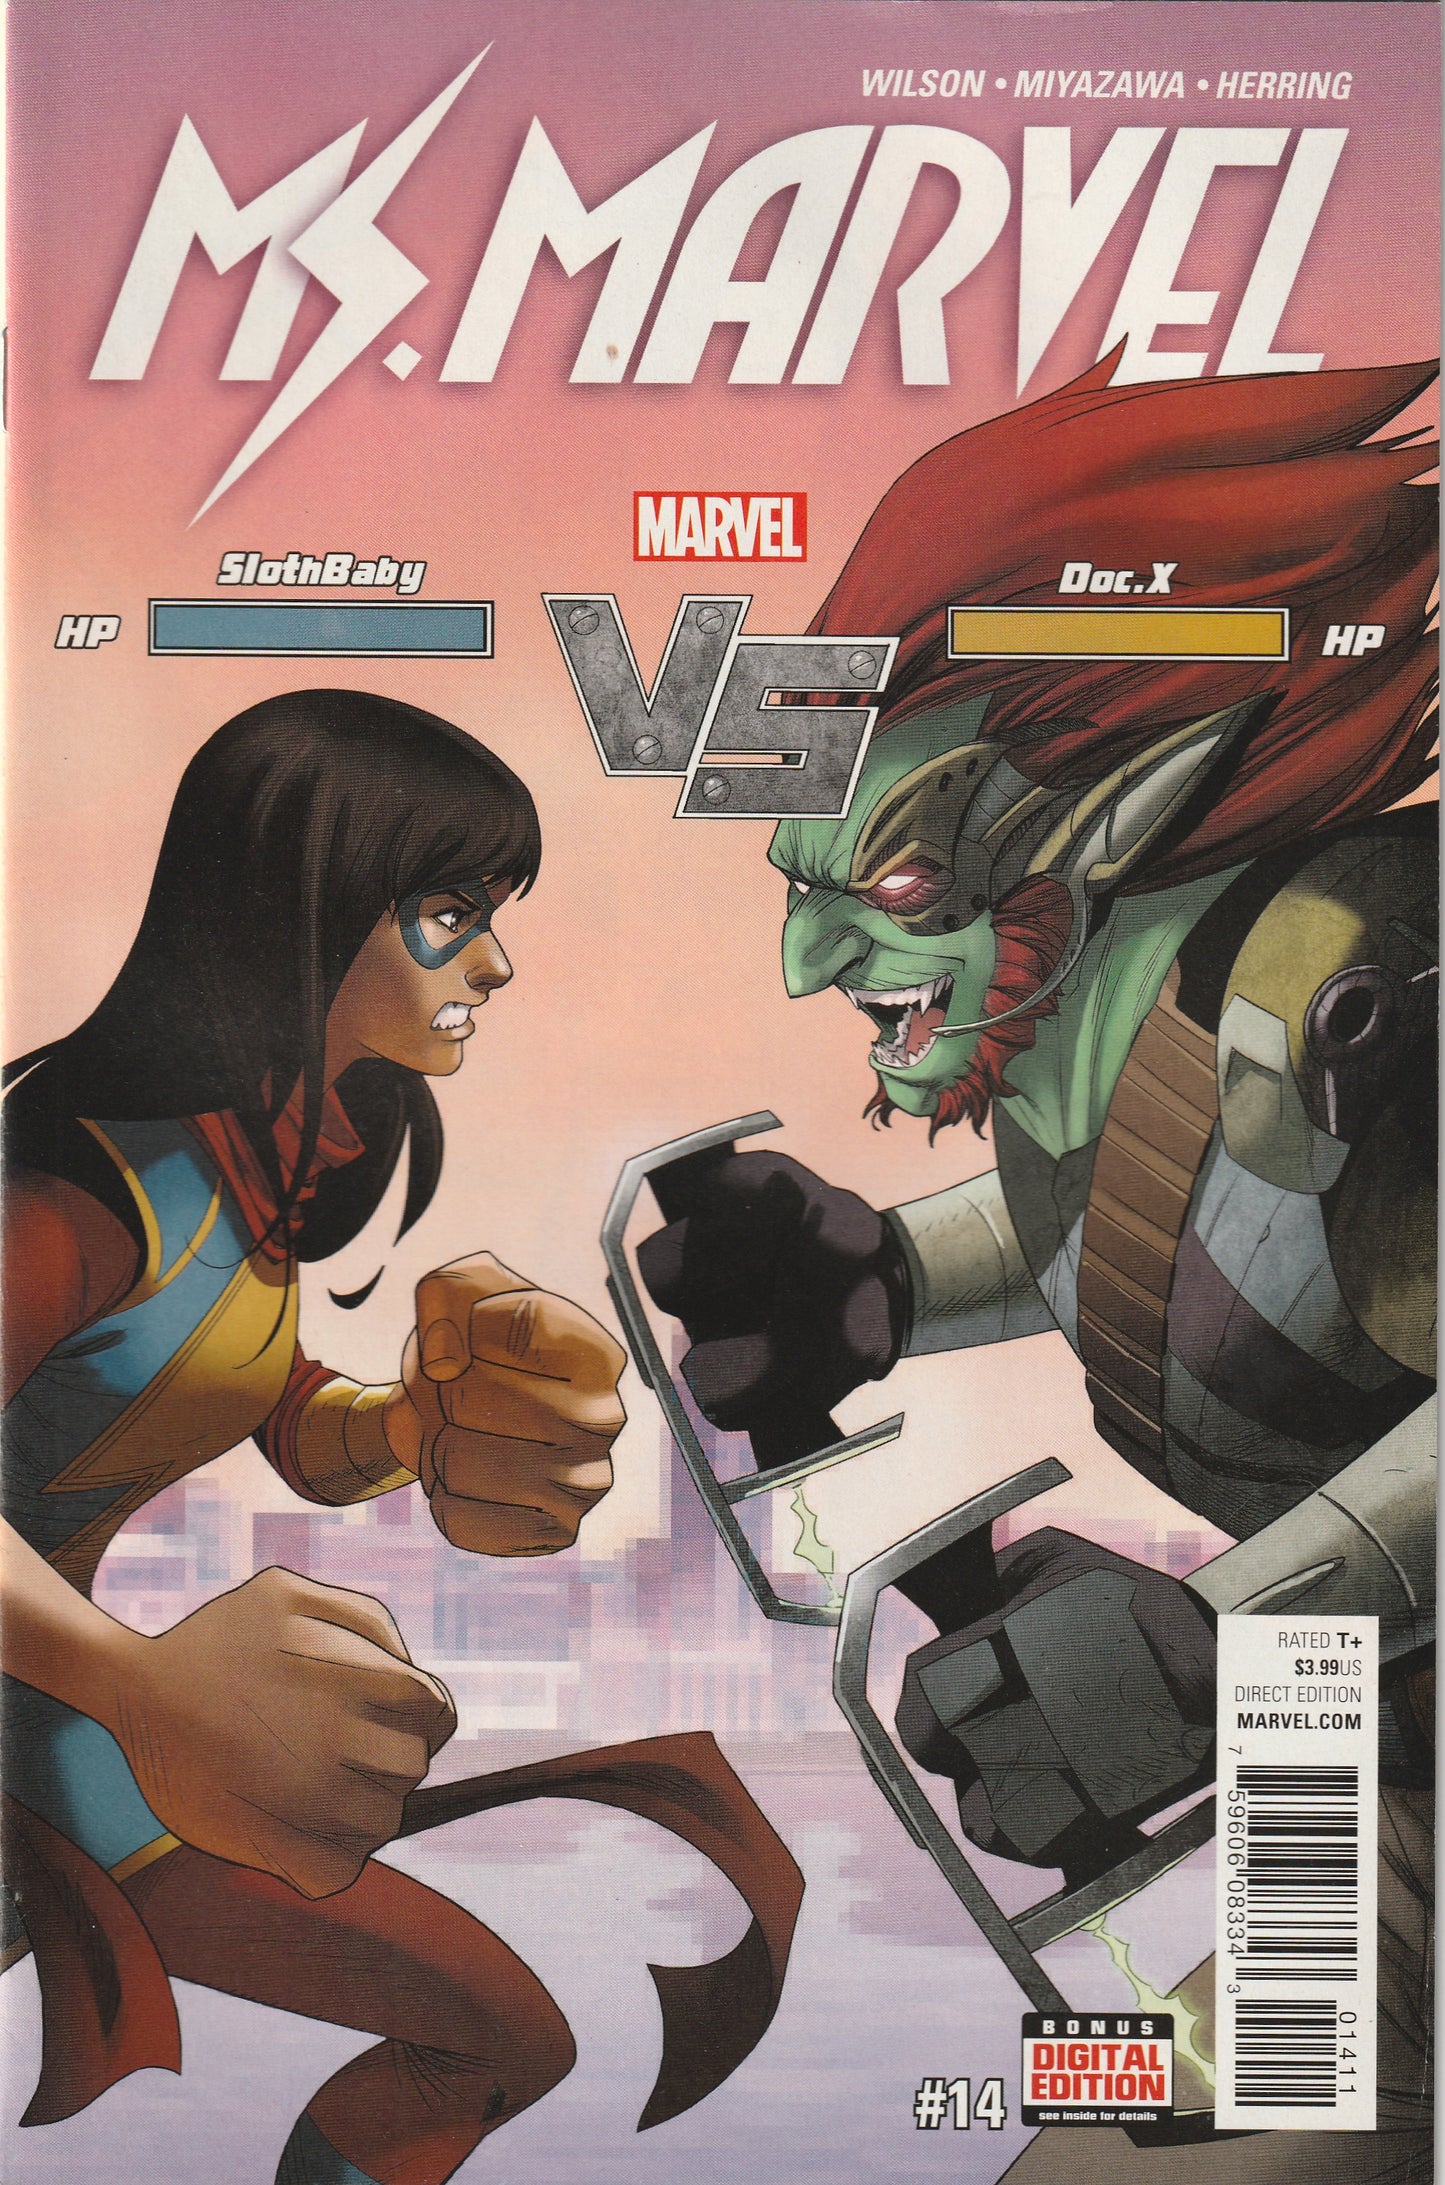 Ms. Marvel #14 (Vol 4, 2017)